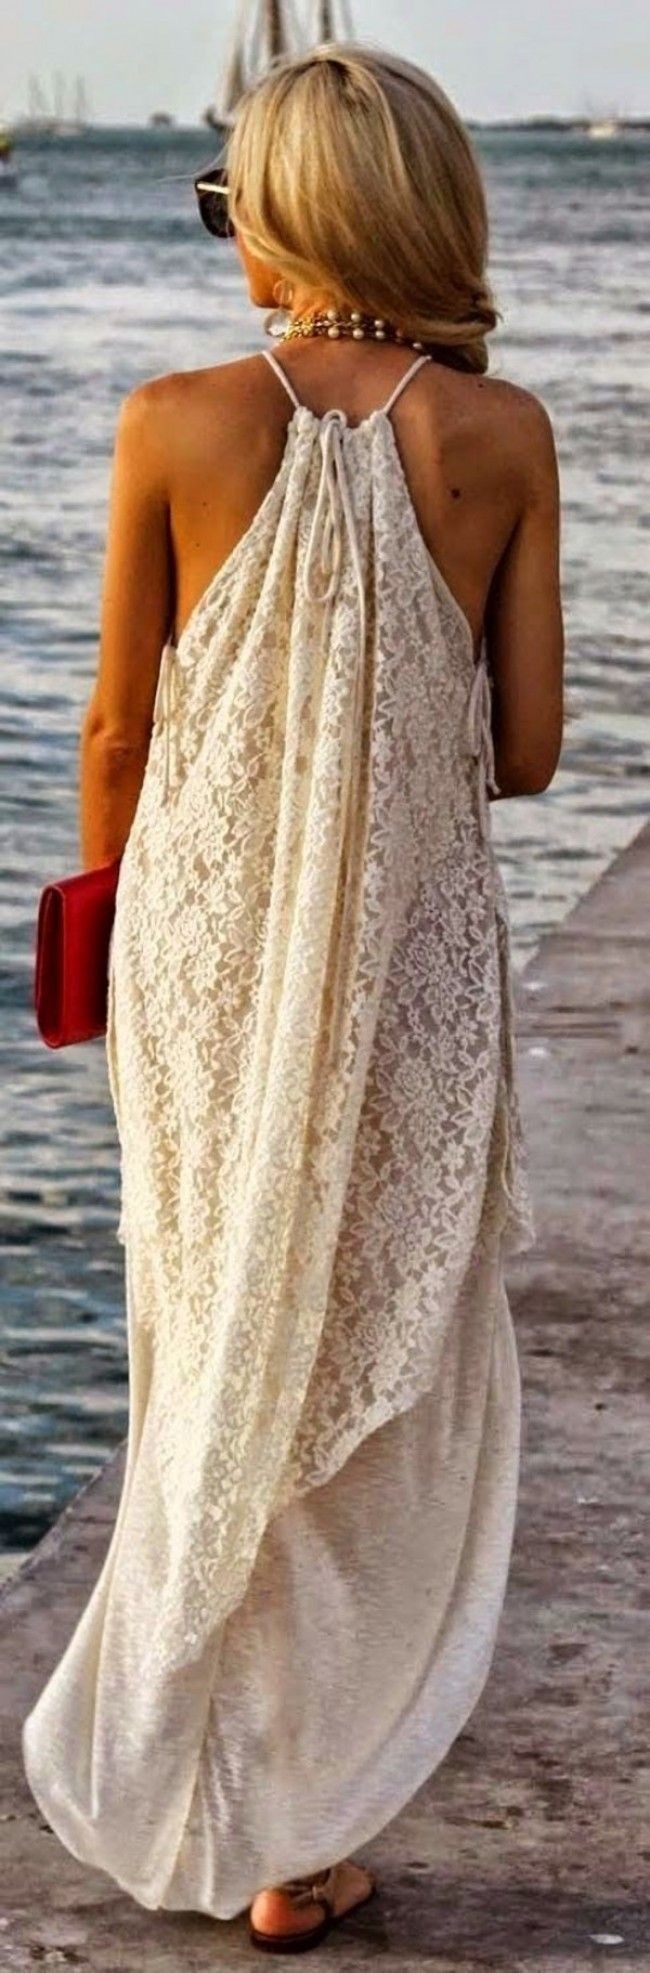 Sheer lace dress